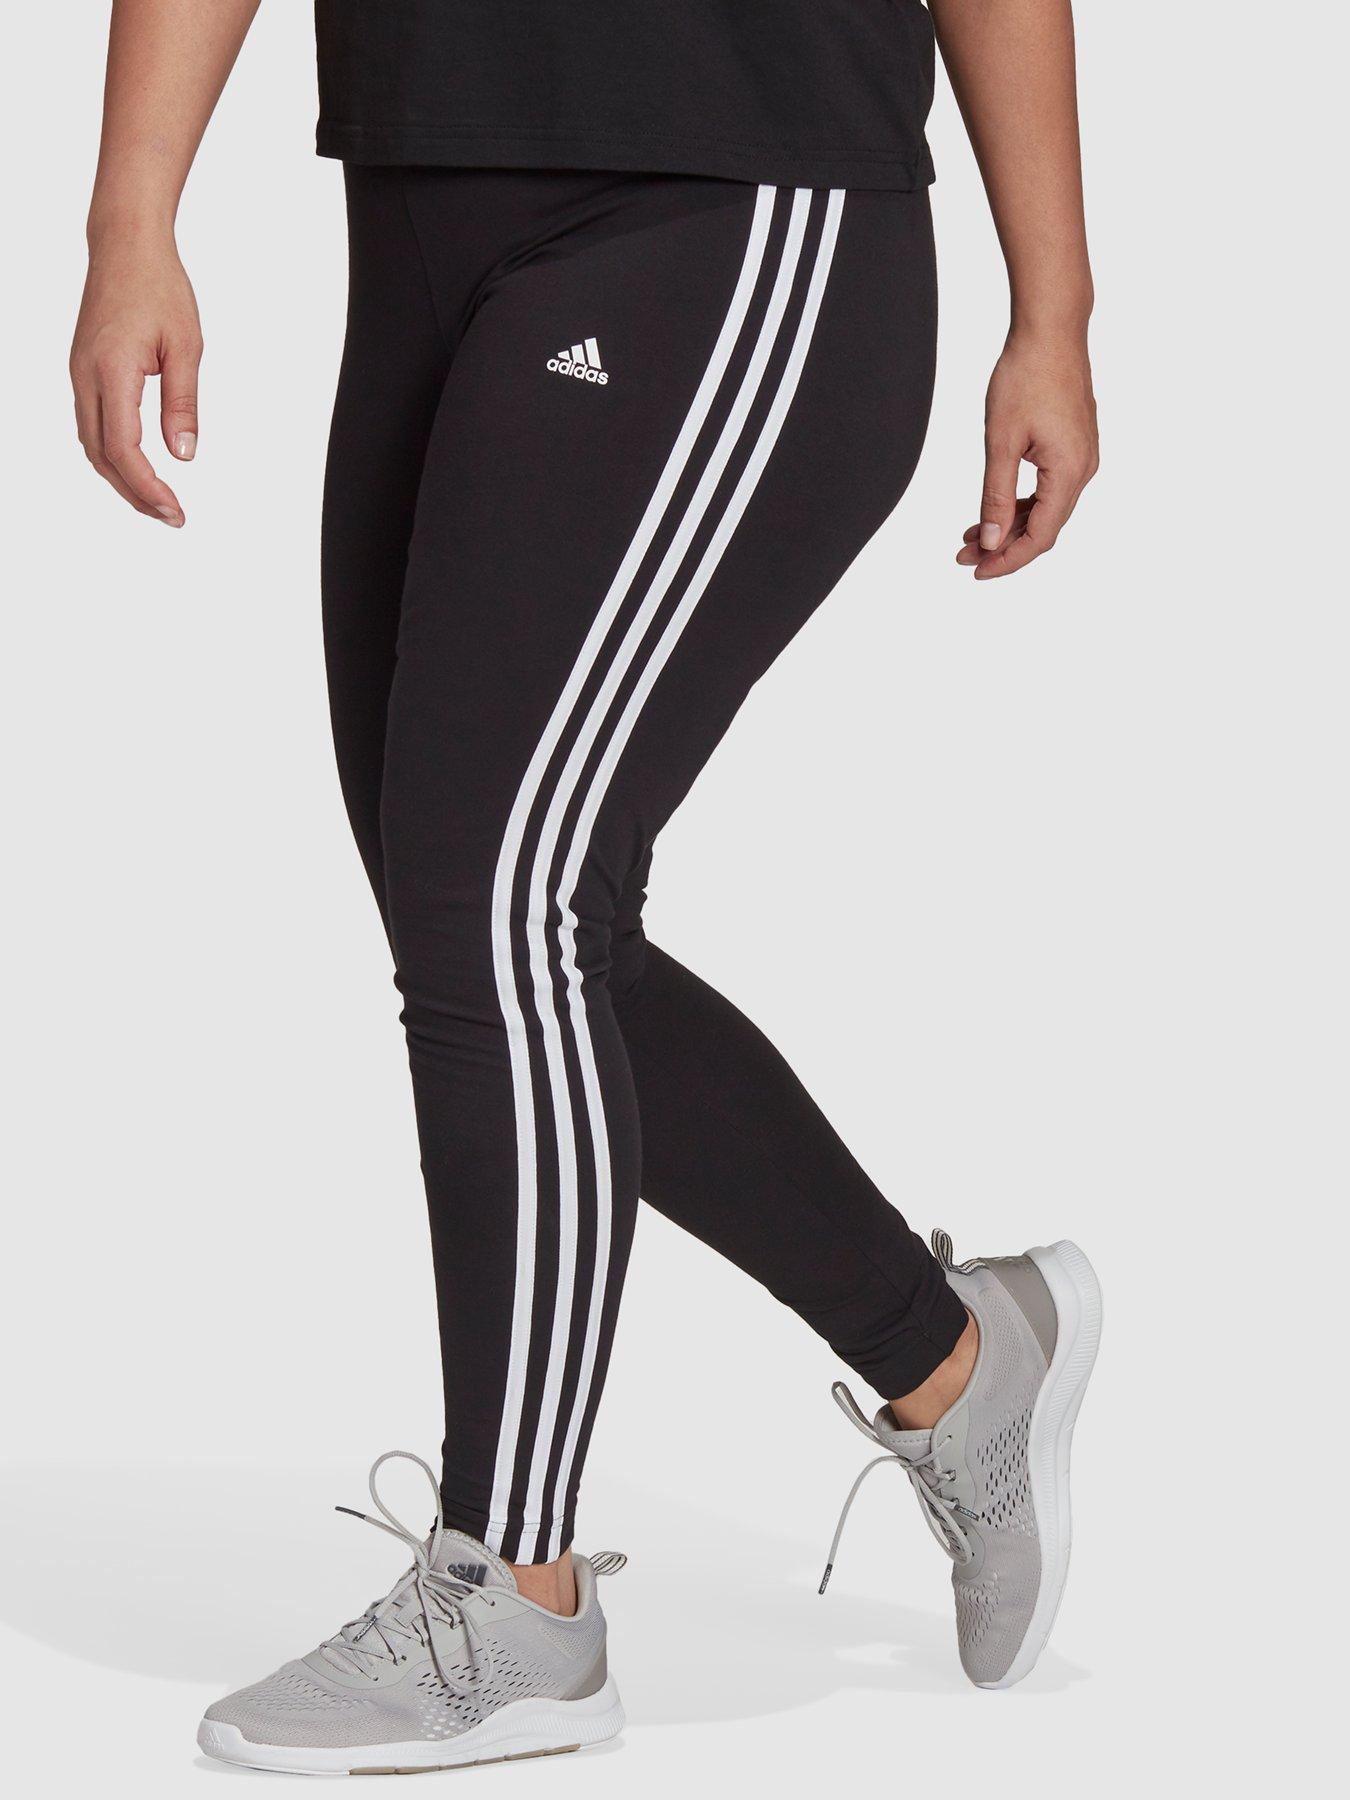 discount 67% Adidas Leggings WOMEN FASHION Trousers Leggings Capri Black M 